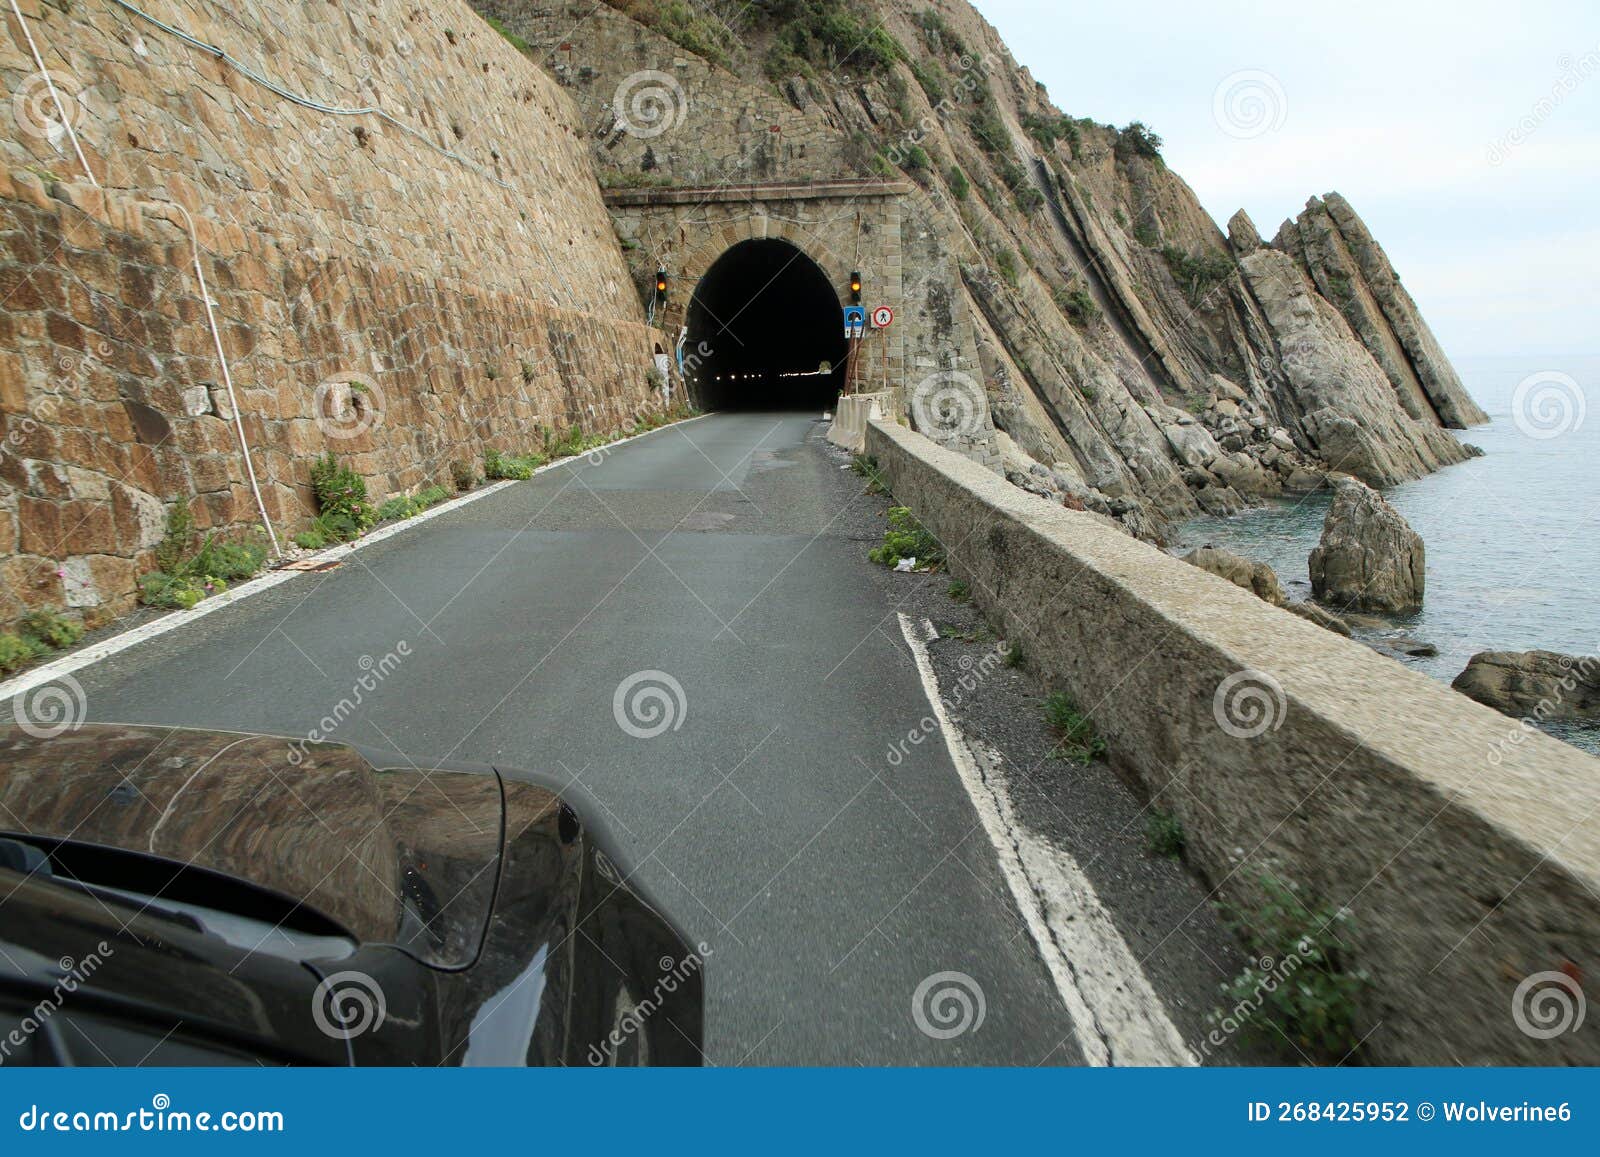 driving the car towards the narrow coastline